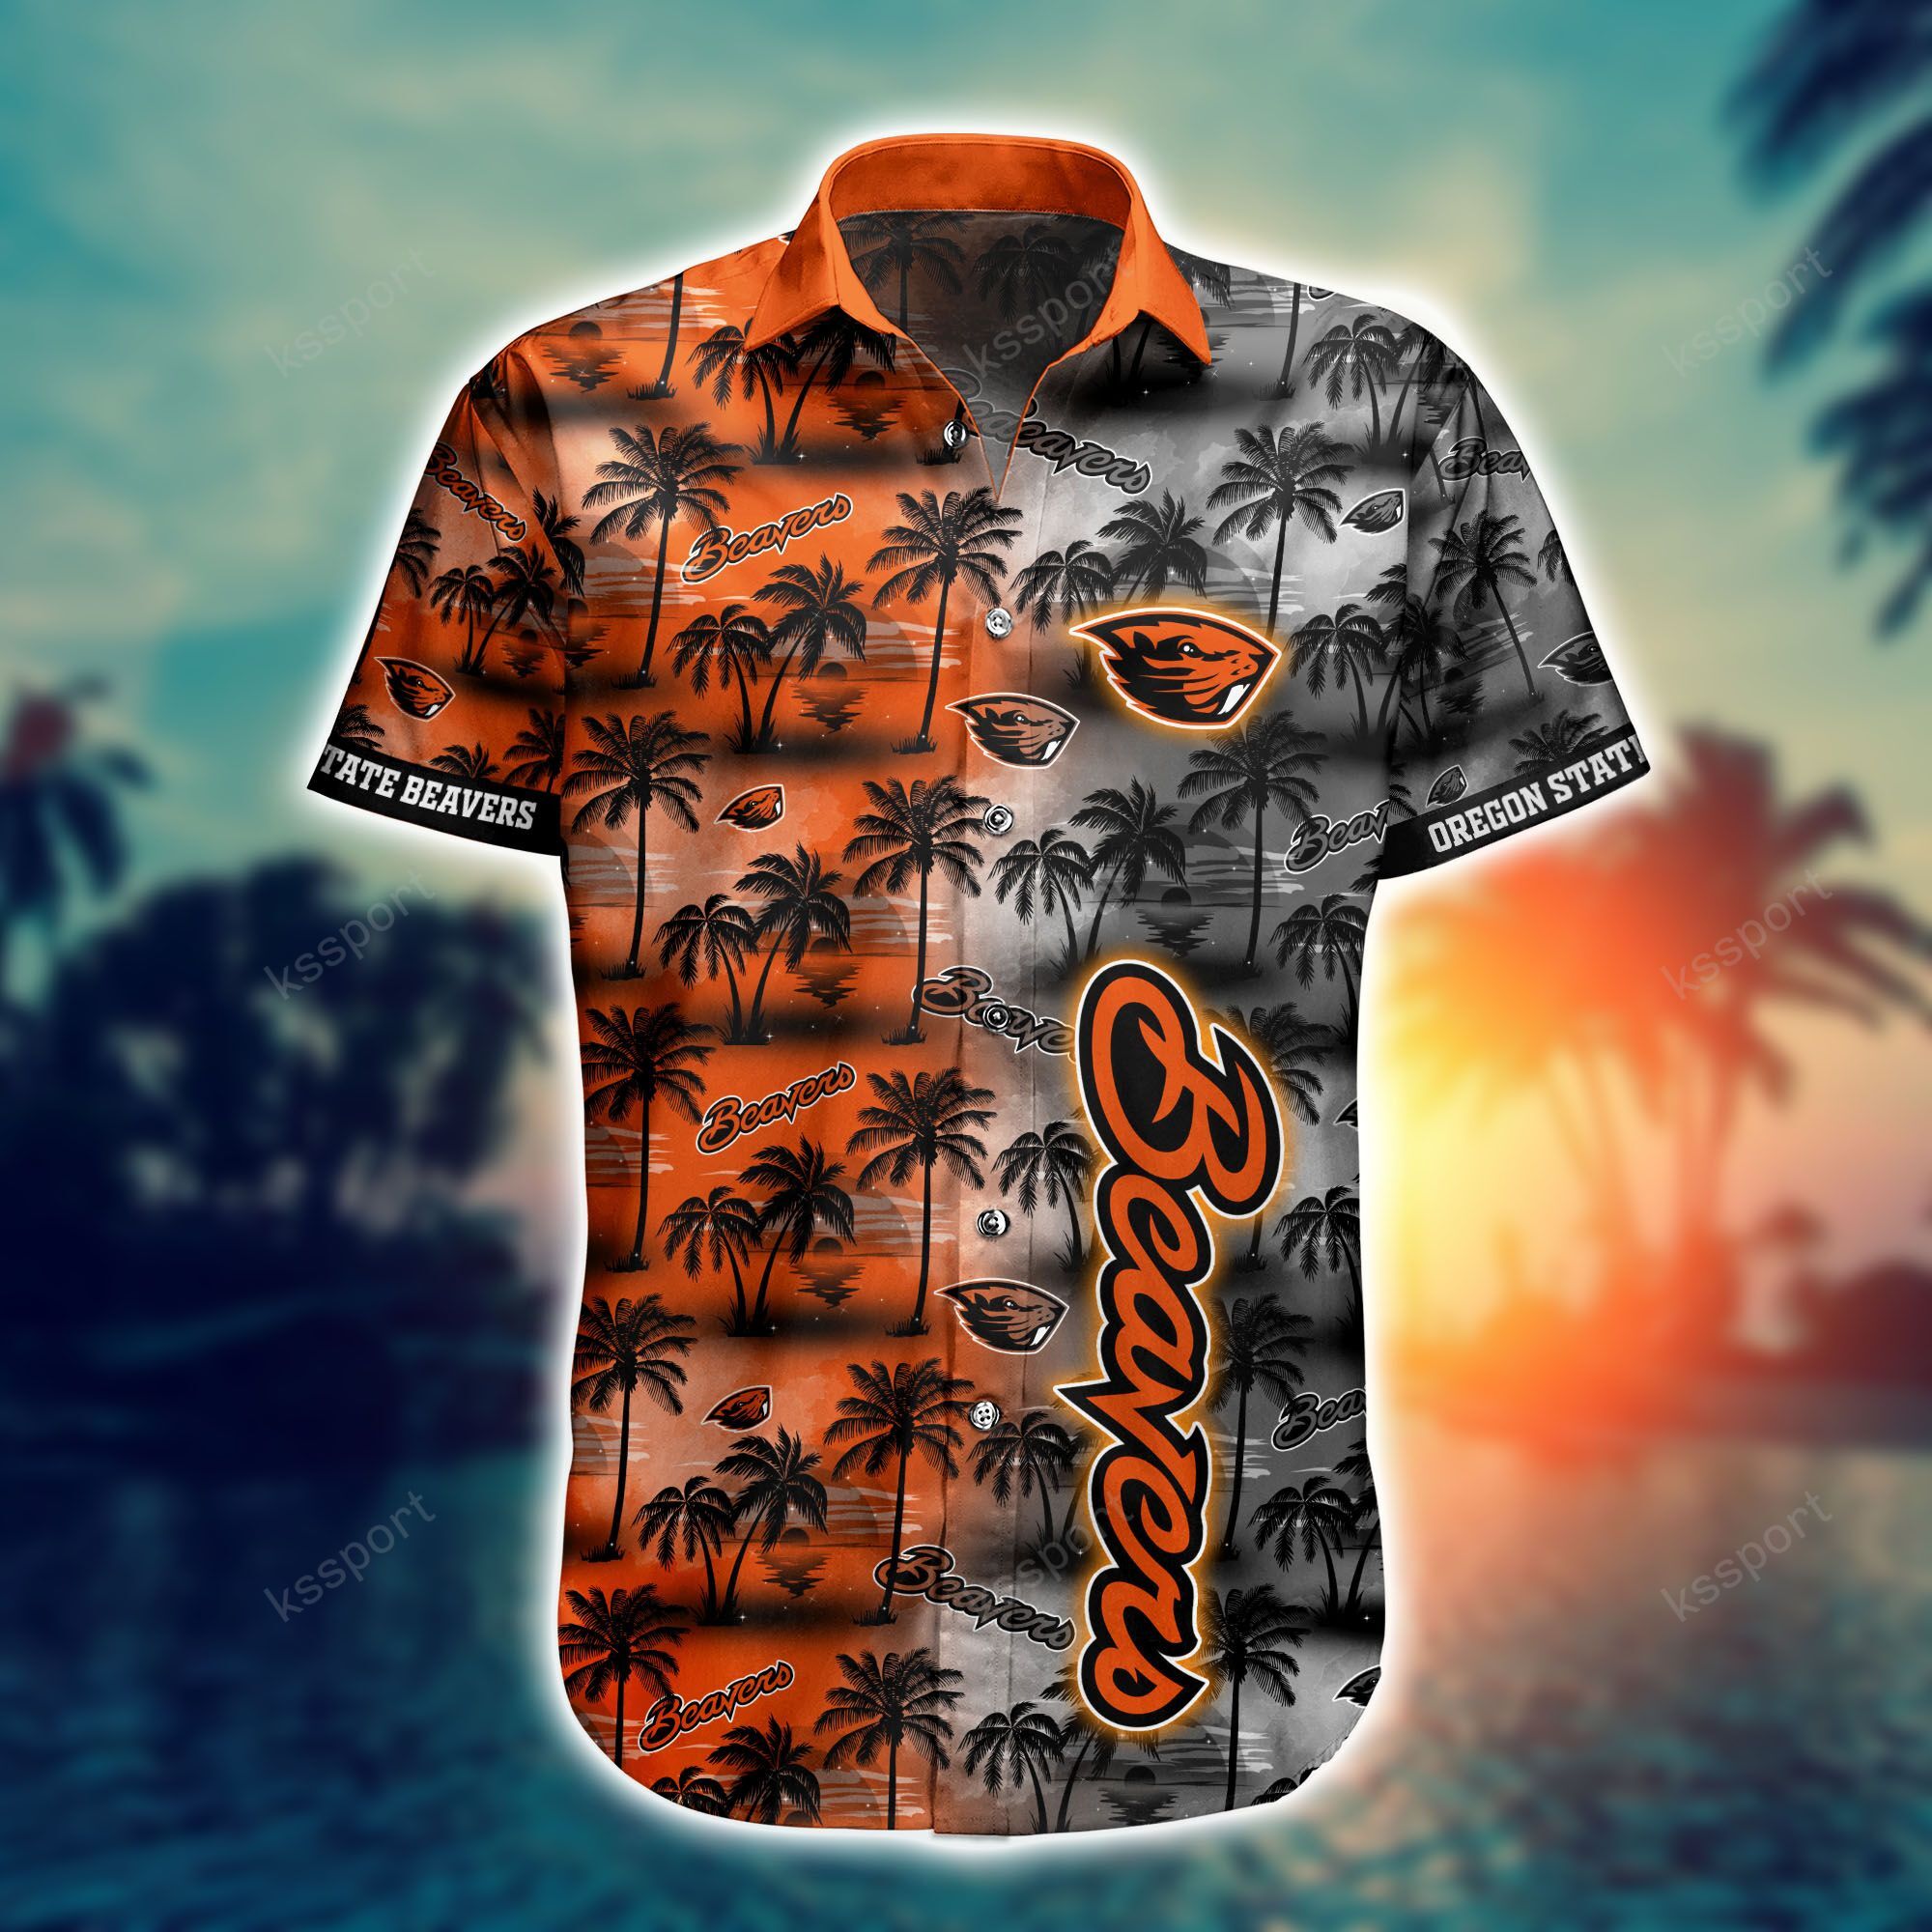 Hawaiian shirt and shorts is a great way to look stylish at a beach party 92